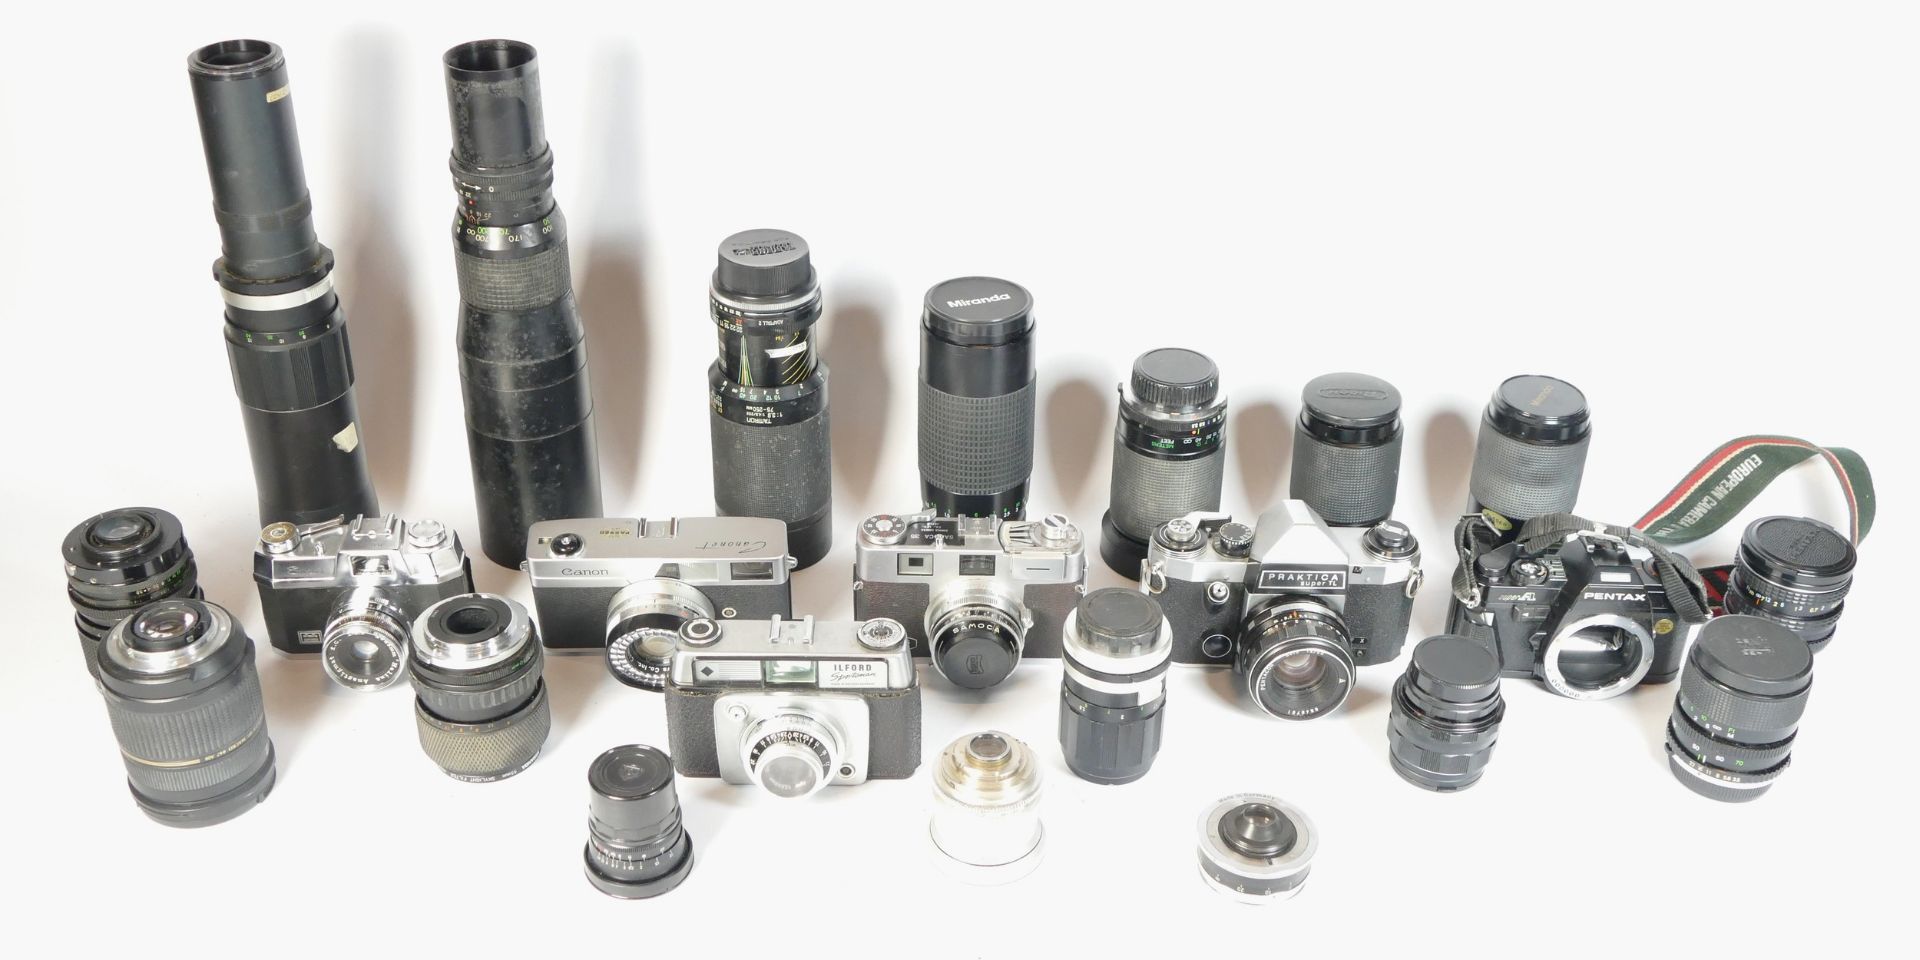 Six SLR vintage film cameras to include a Pentax Super A, a Samoca 35, a Halina 35x and an Ilford